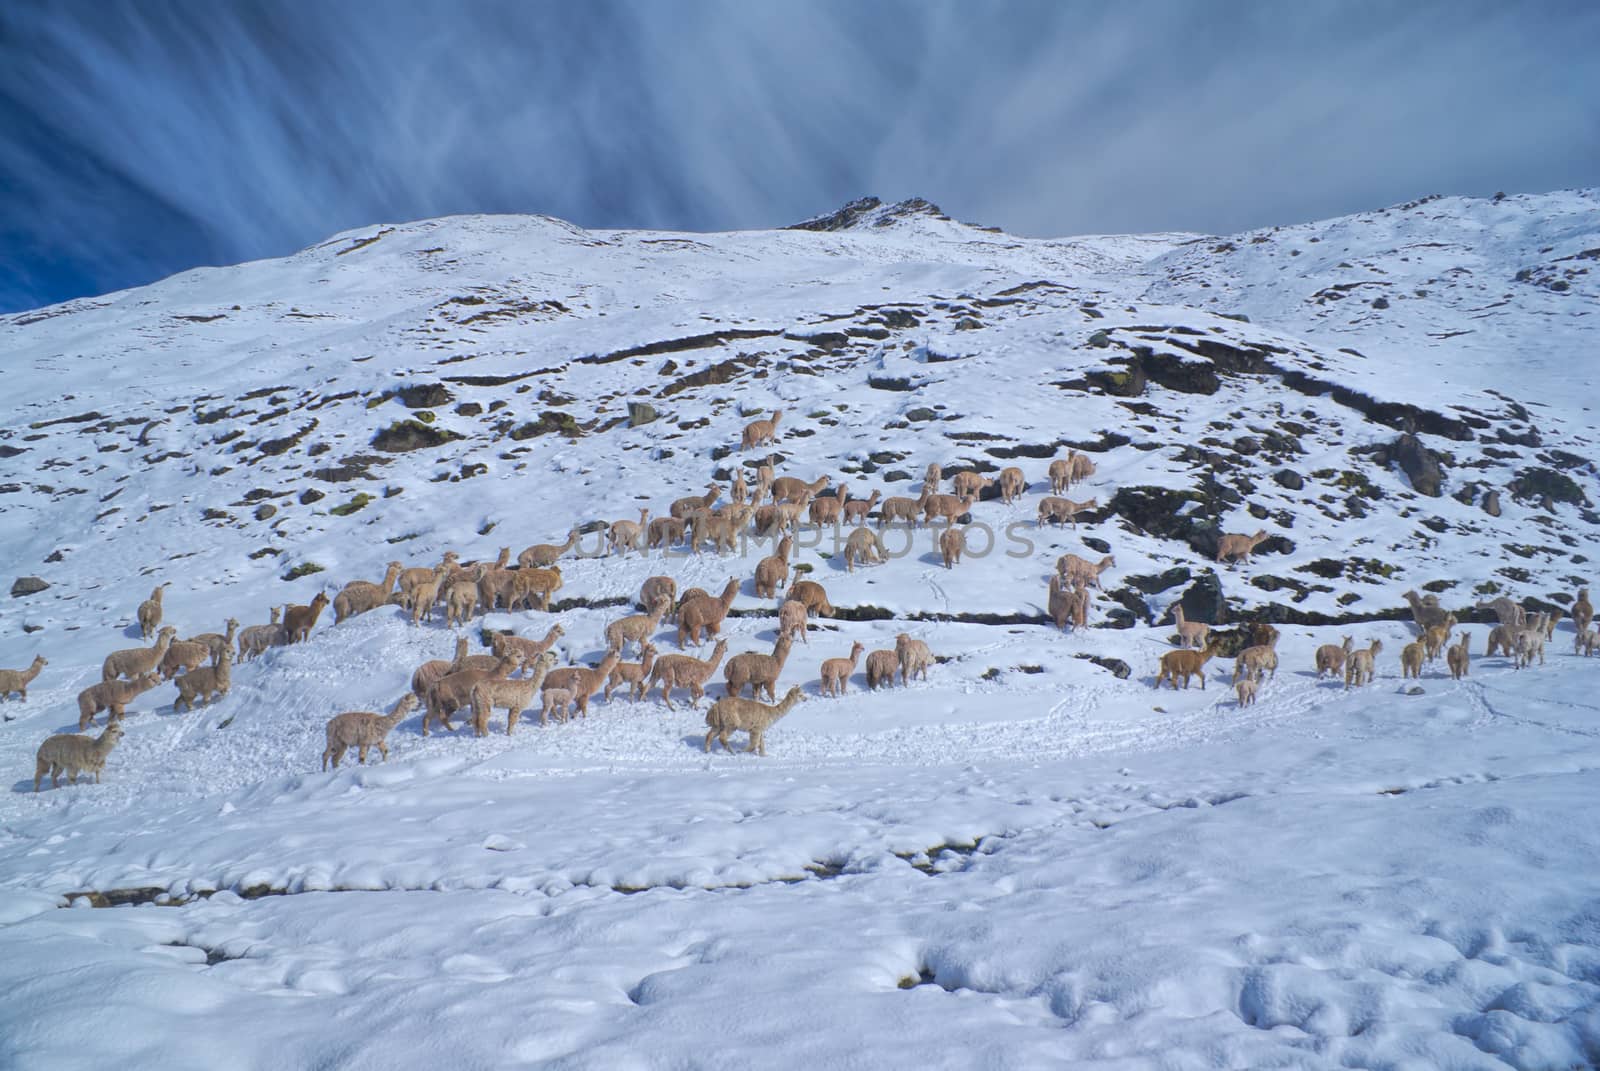 Herd of Llamas in Andes by MichalKnitl